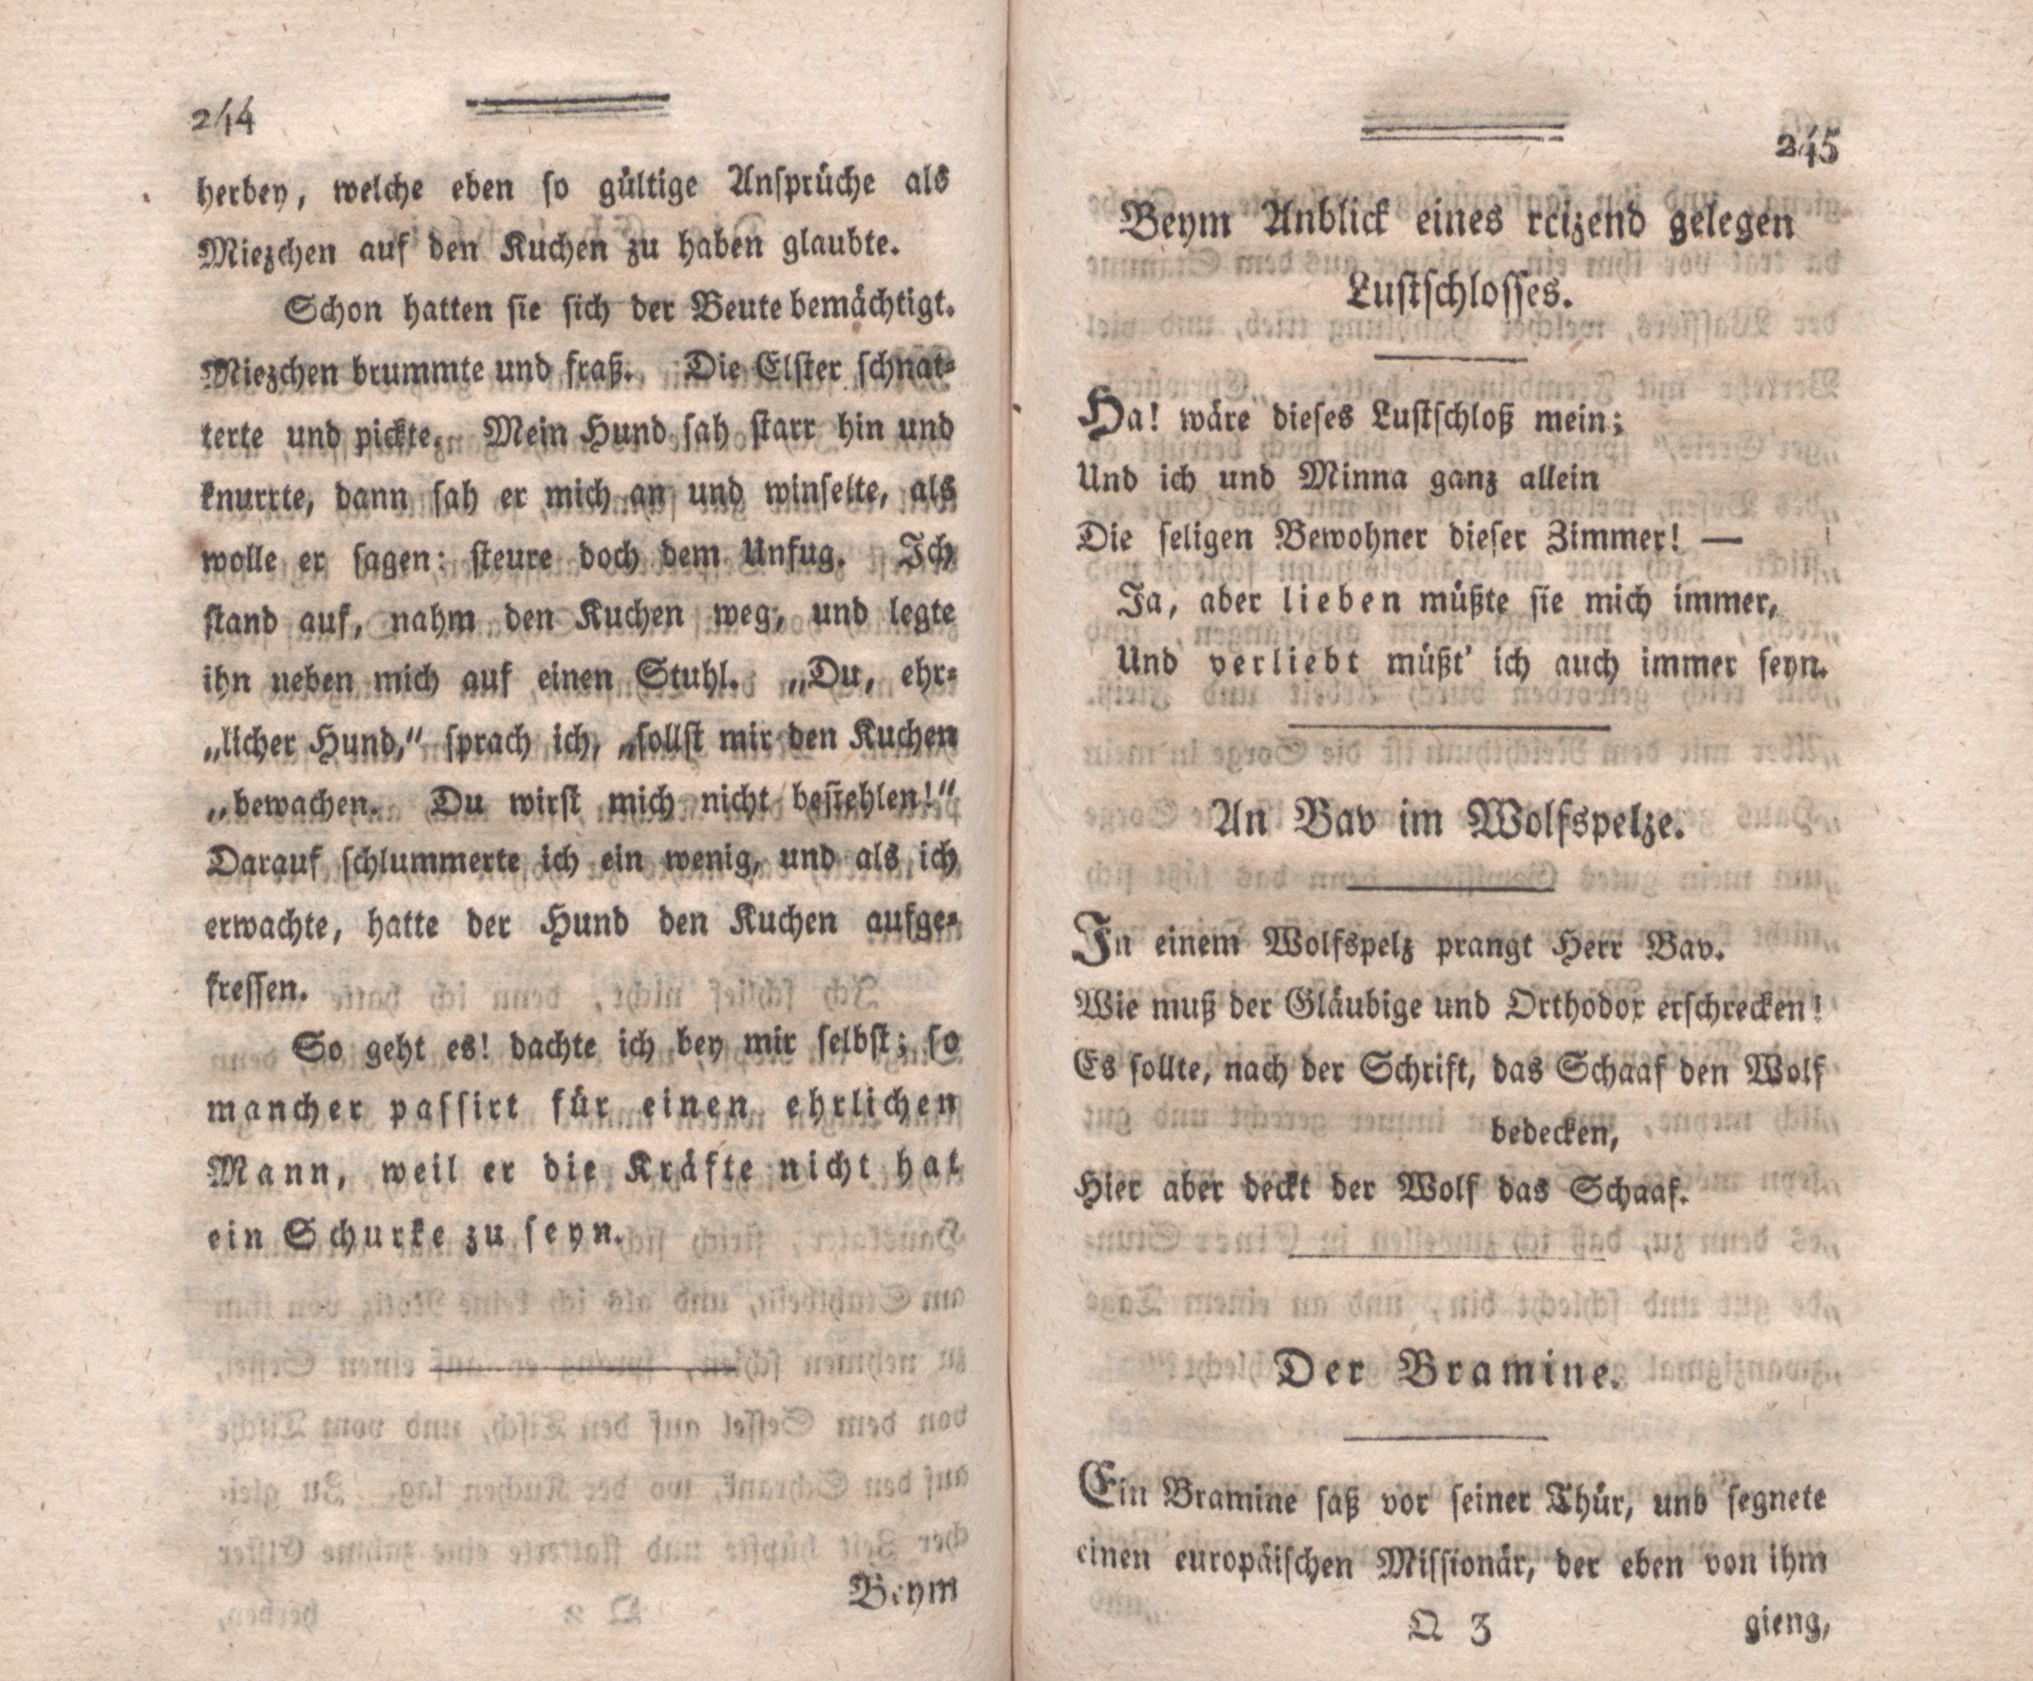 Beym Anblick eines reizend gelegen Luftschlosses (1794) | 1. (244-245) Main body of text